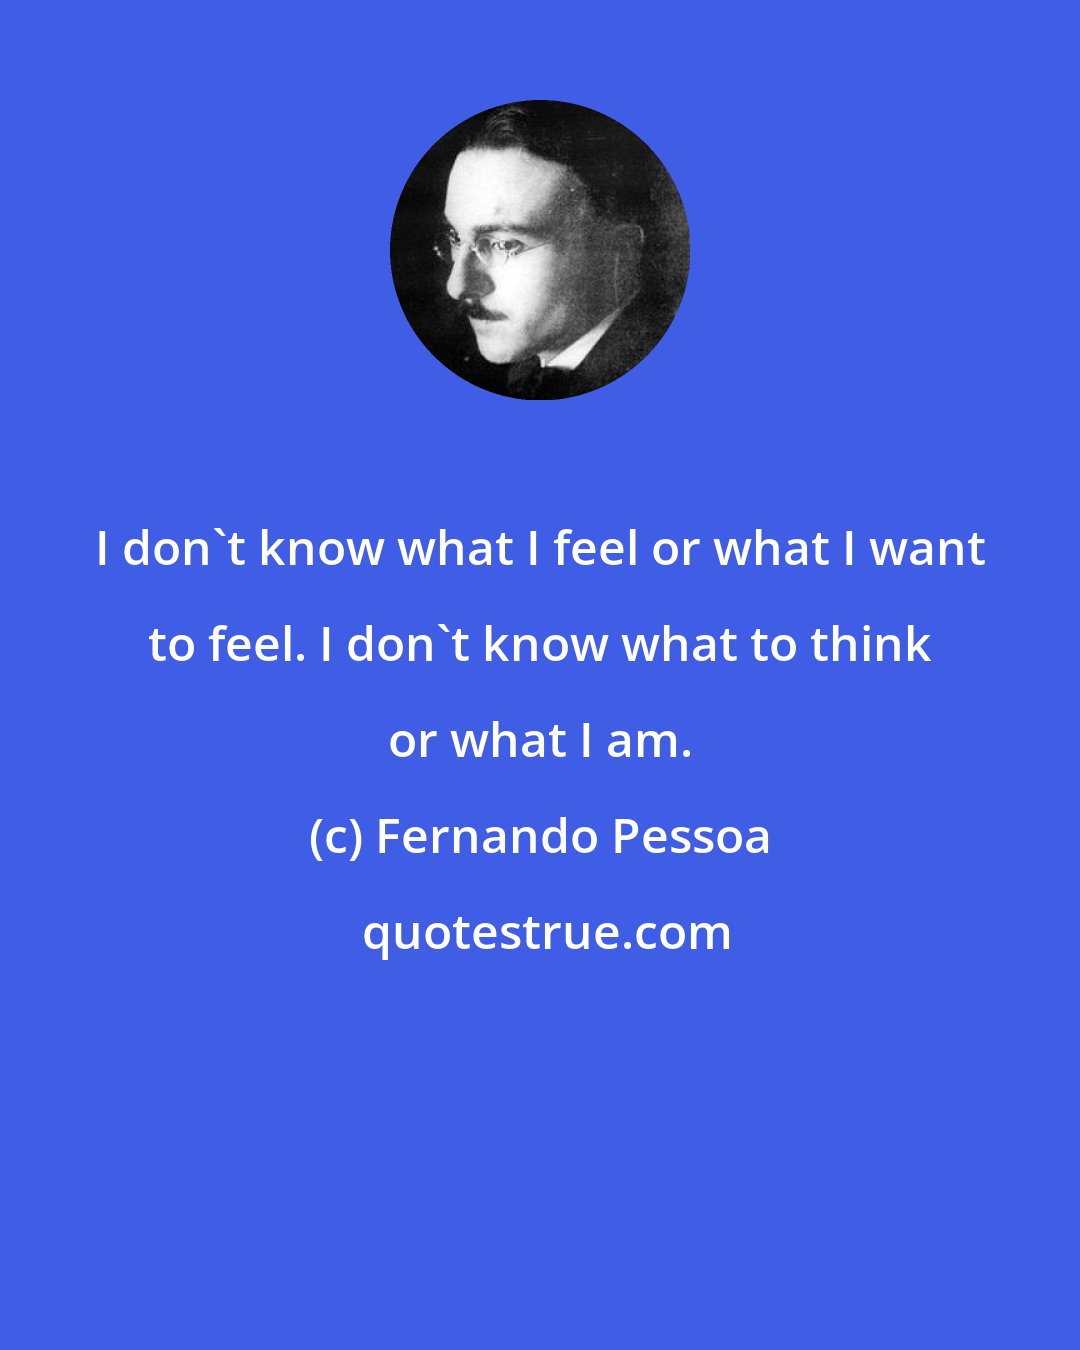 Fernando Pessoa: I don't know what I feel or what I want to feel. I don't know what to think or what I am.